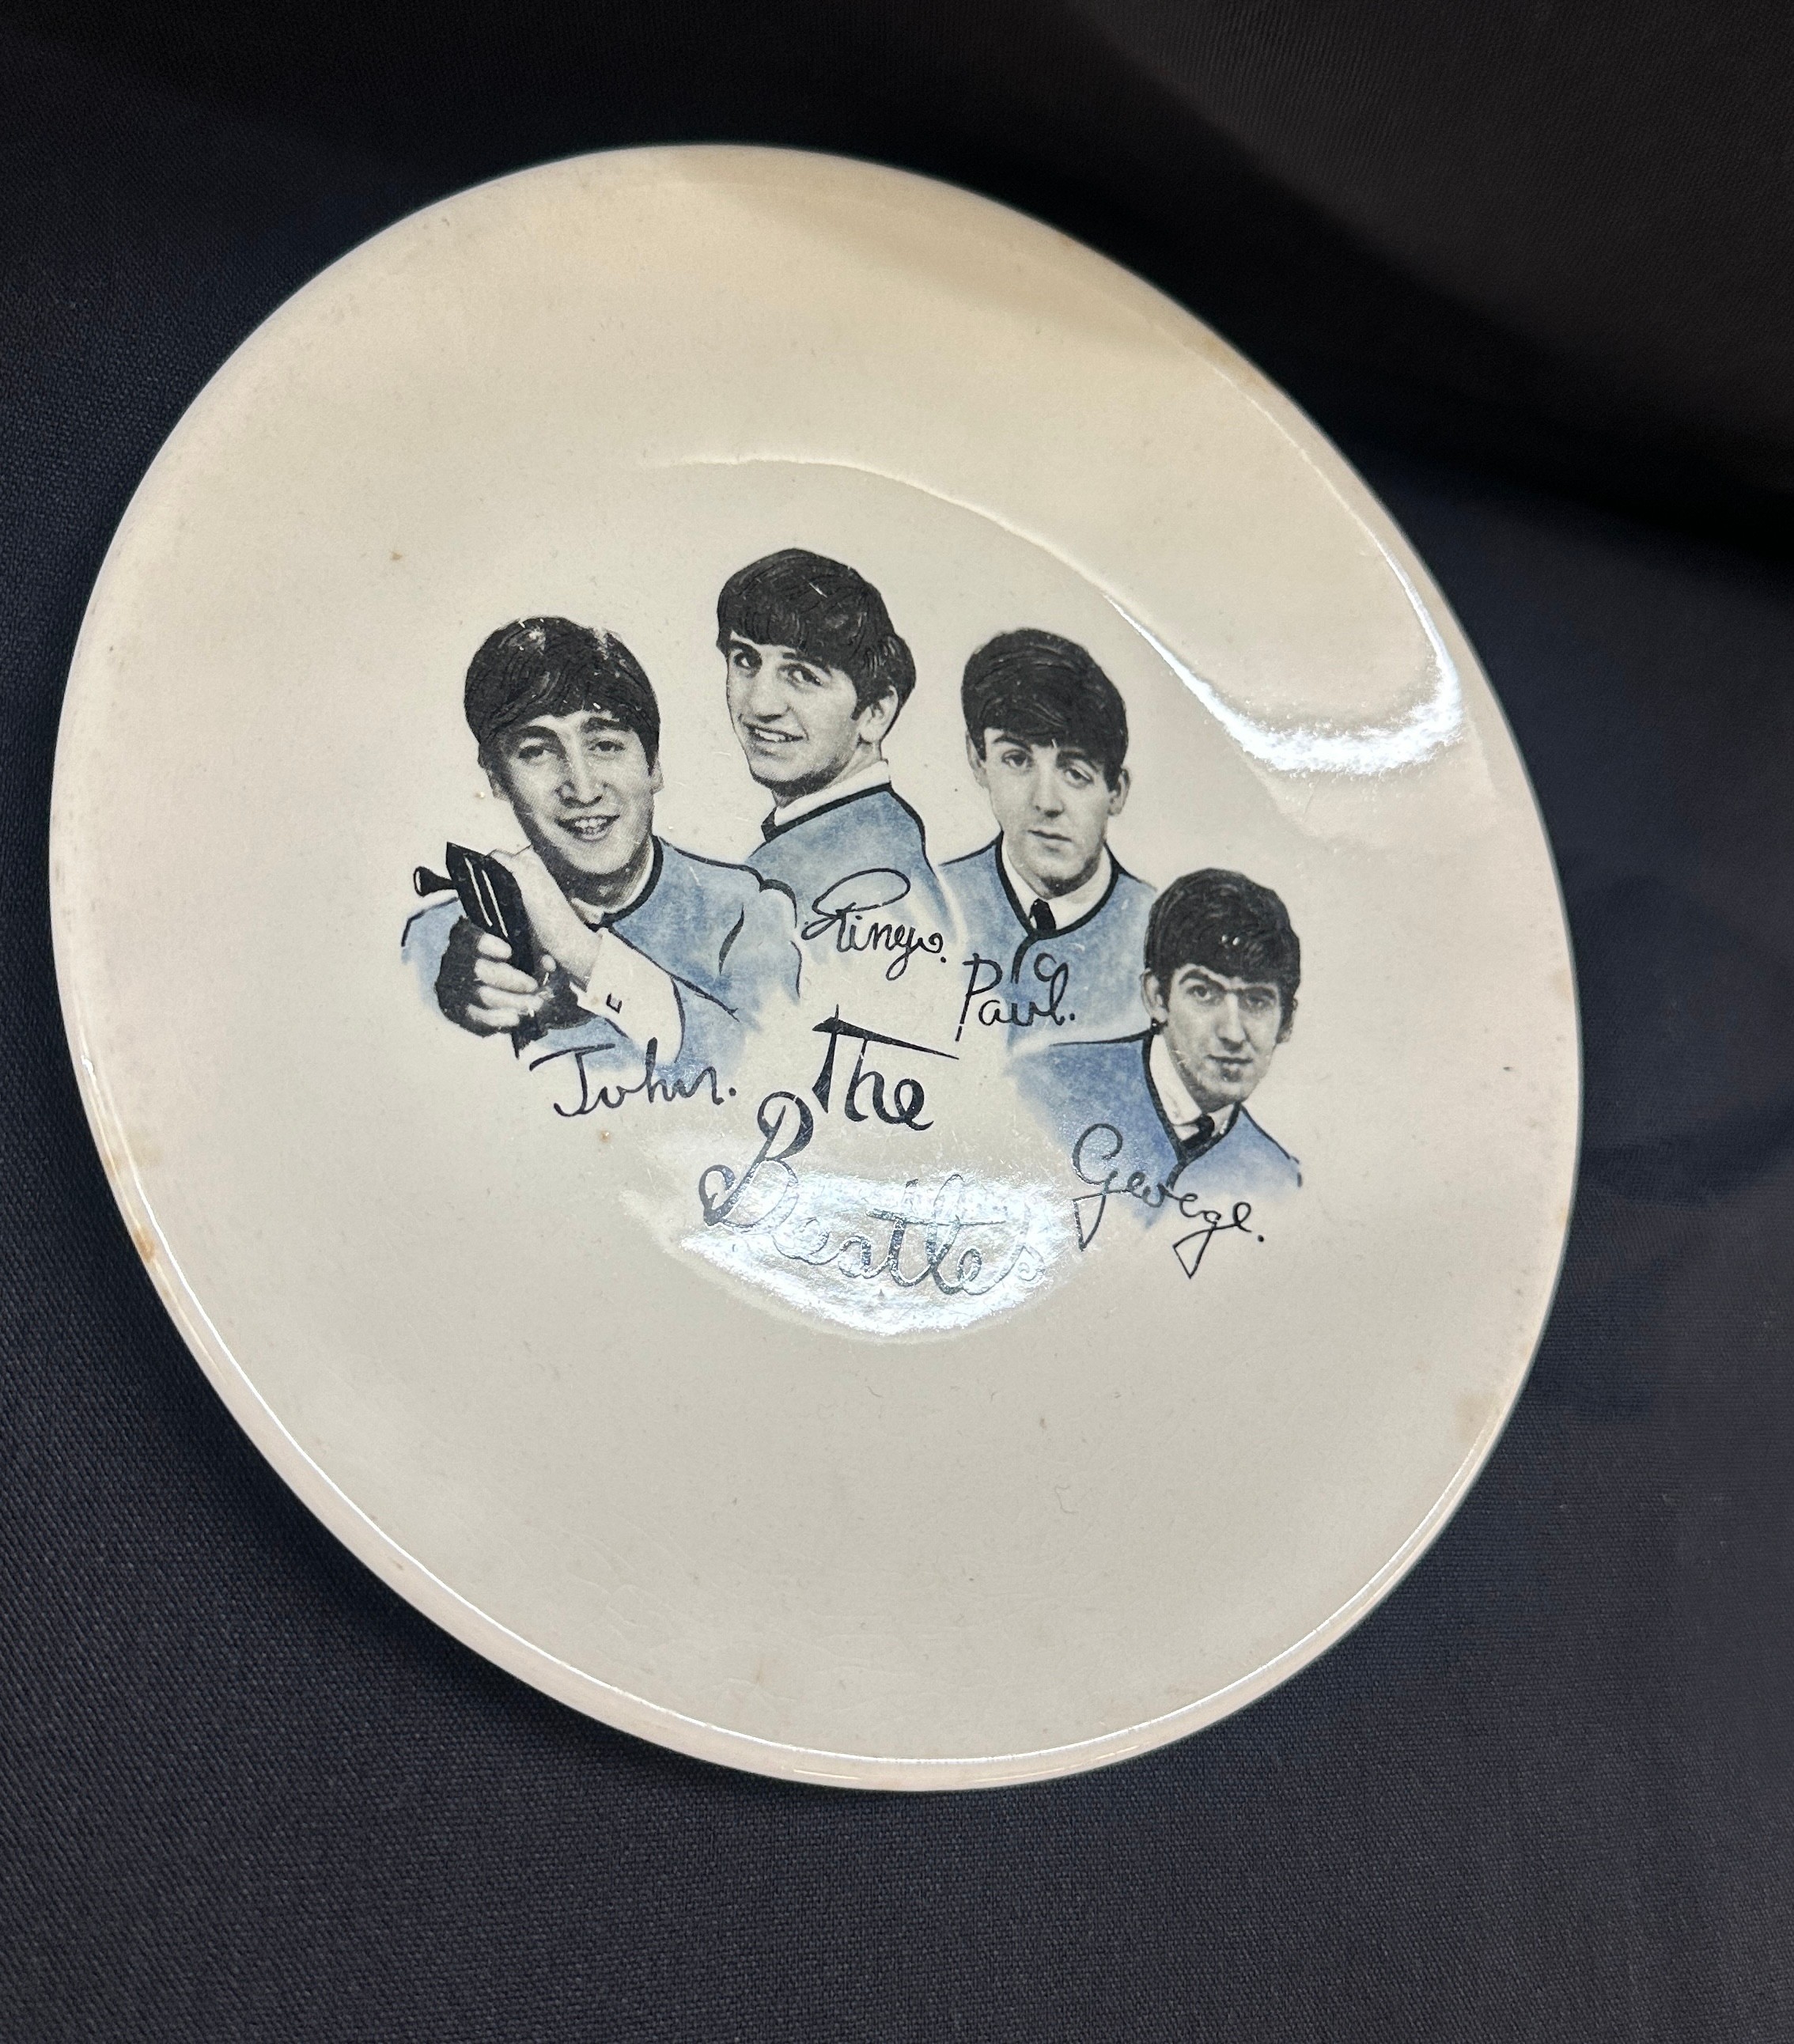 Original 60's era Beatles plate measures approx 7 inches diameter - Image 3 of 4